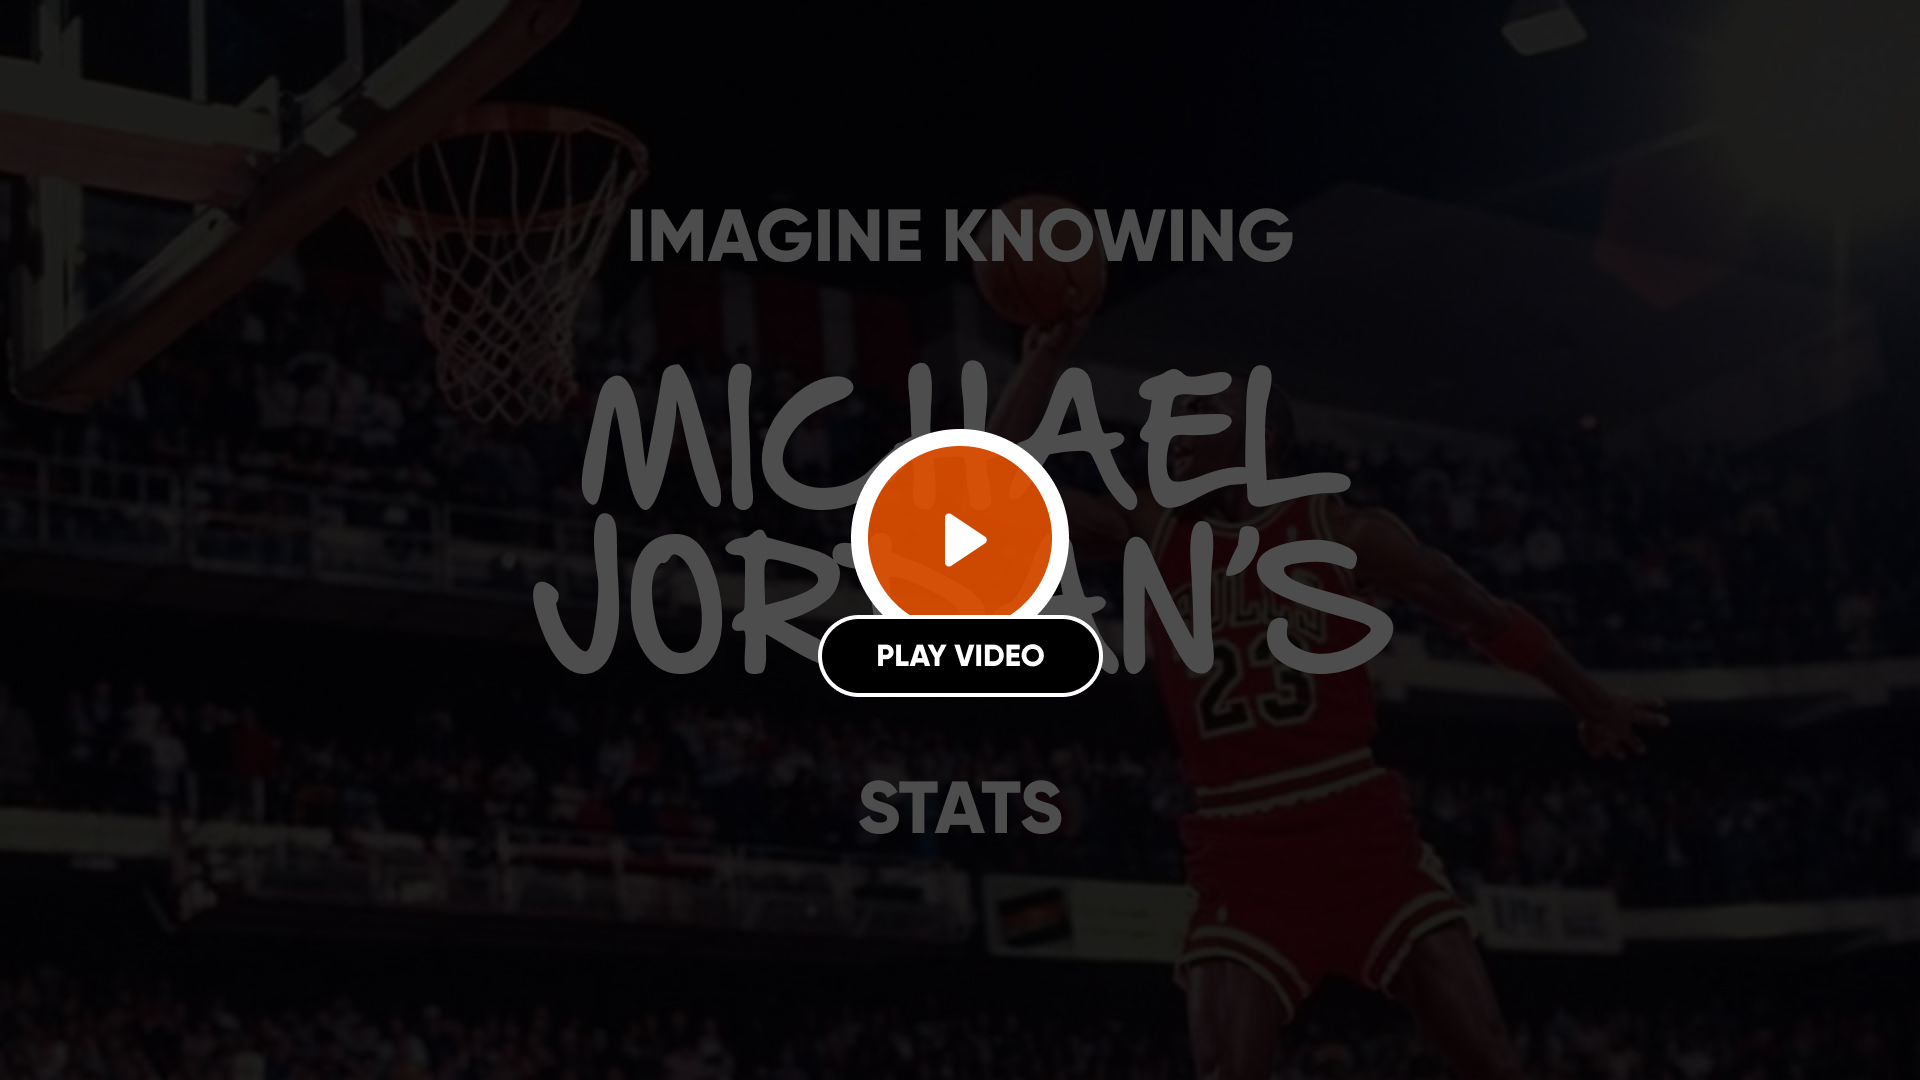 The digital basketball statistics solution